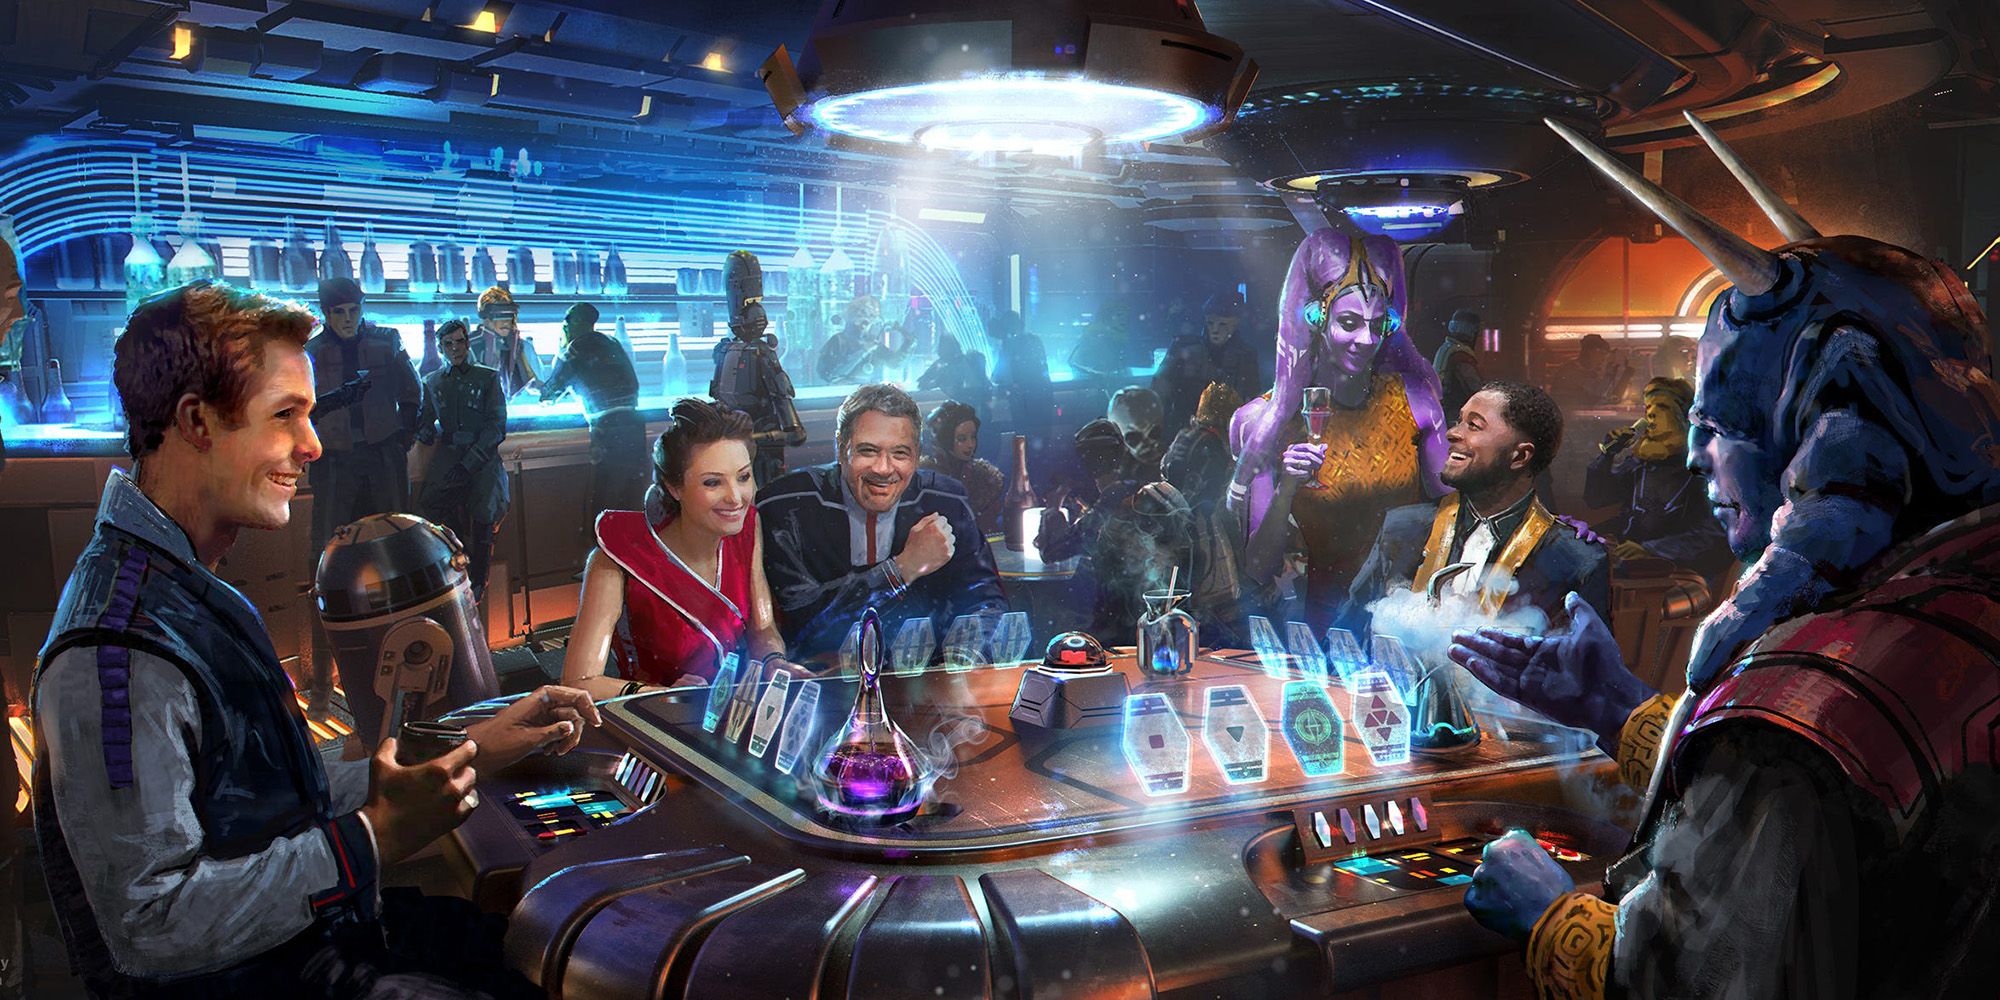 Blue Shrimp de Disney’s Star Wars Hotel tardó 6 meses en crearse